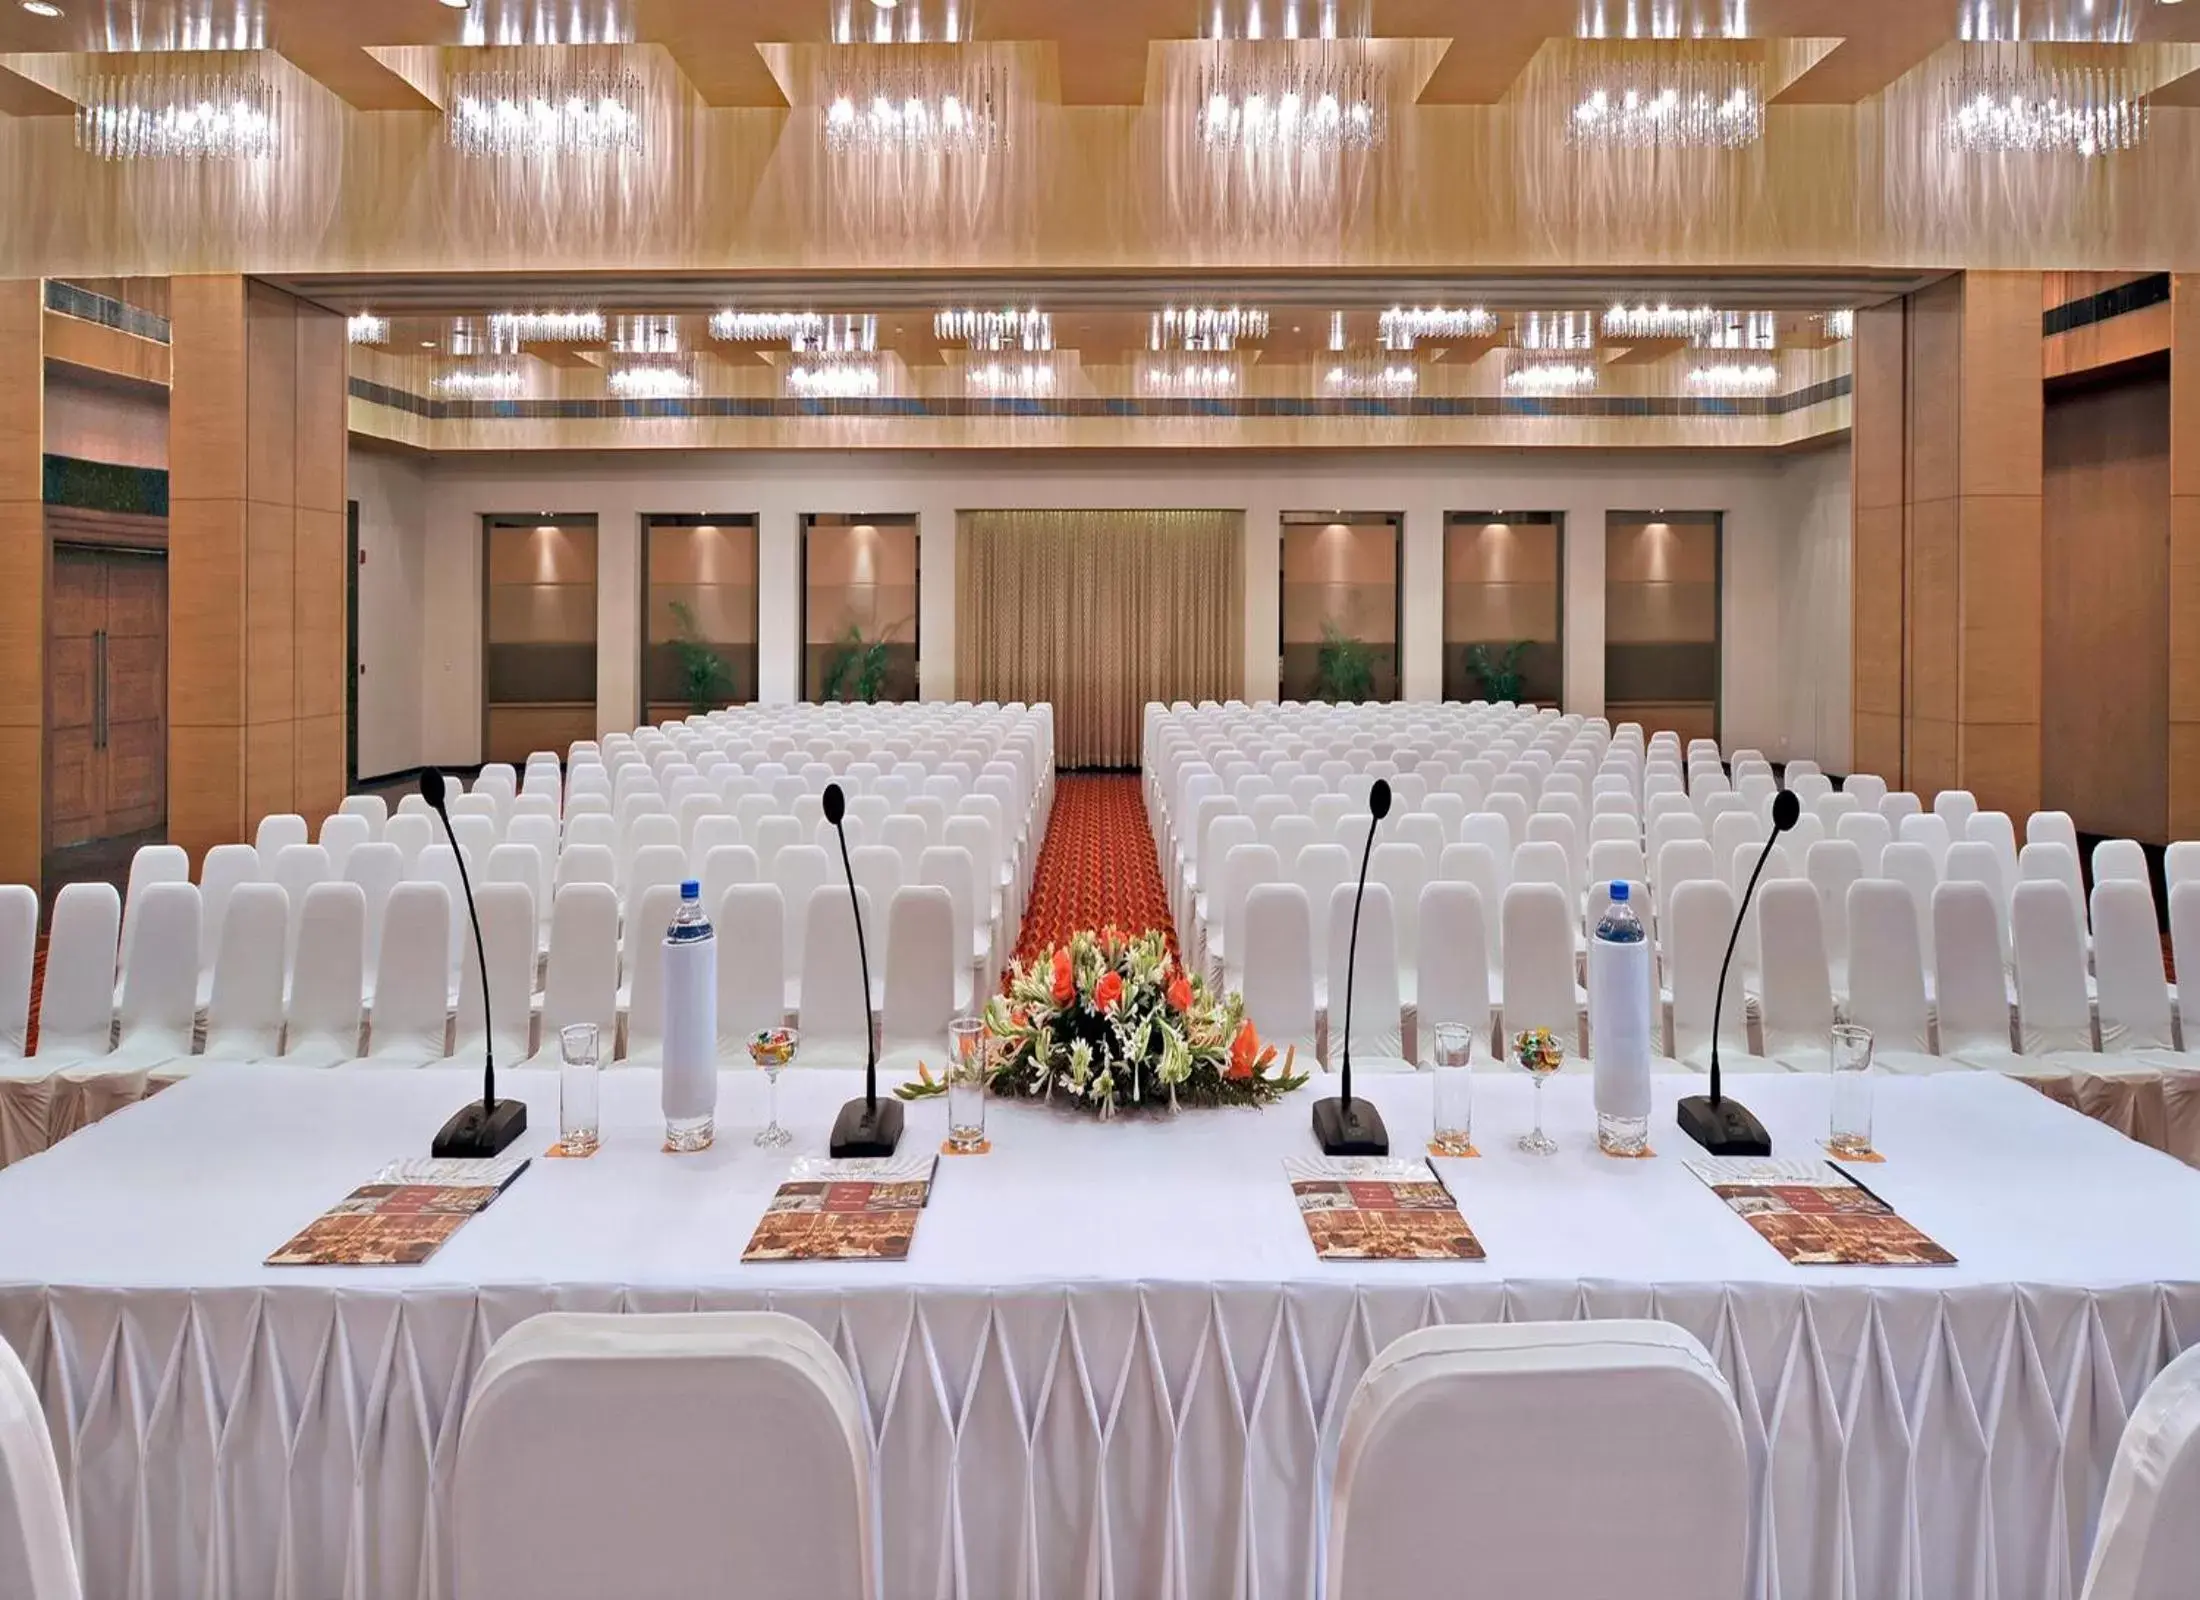 Banquet/Function facilities, Banquet Facilities in Hometel Chandigarh